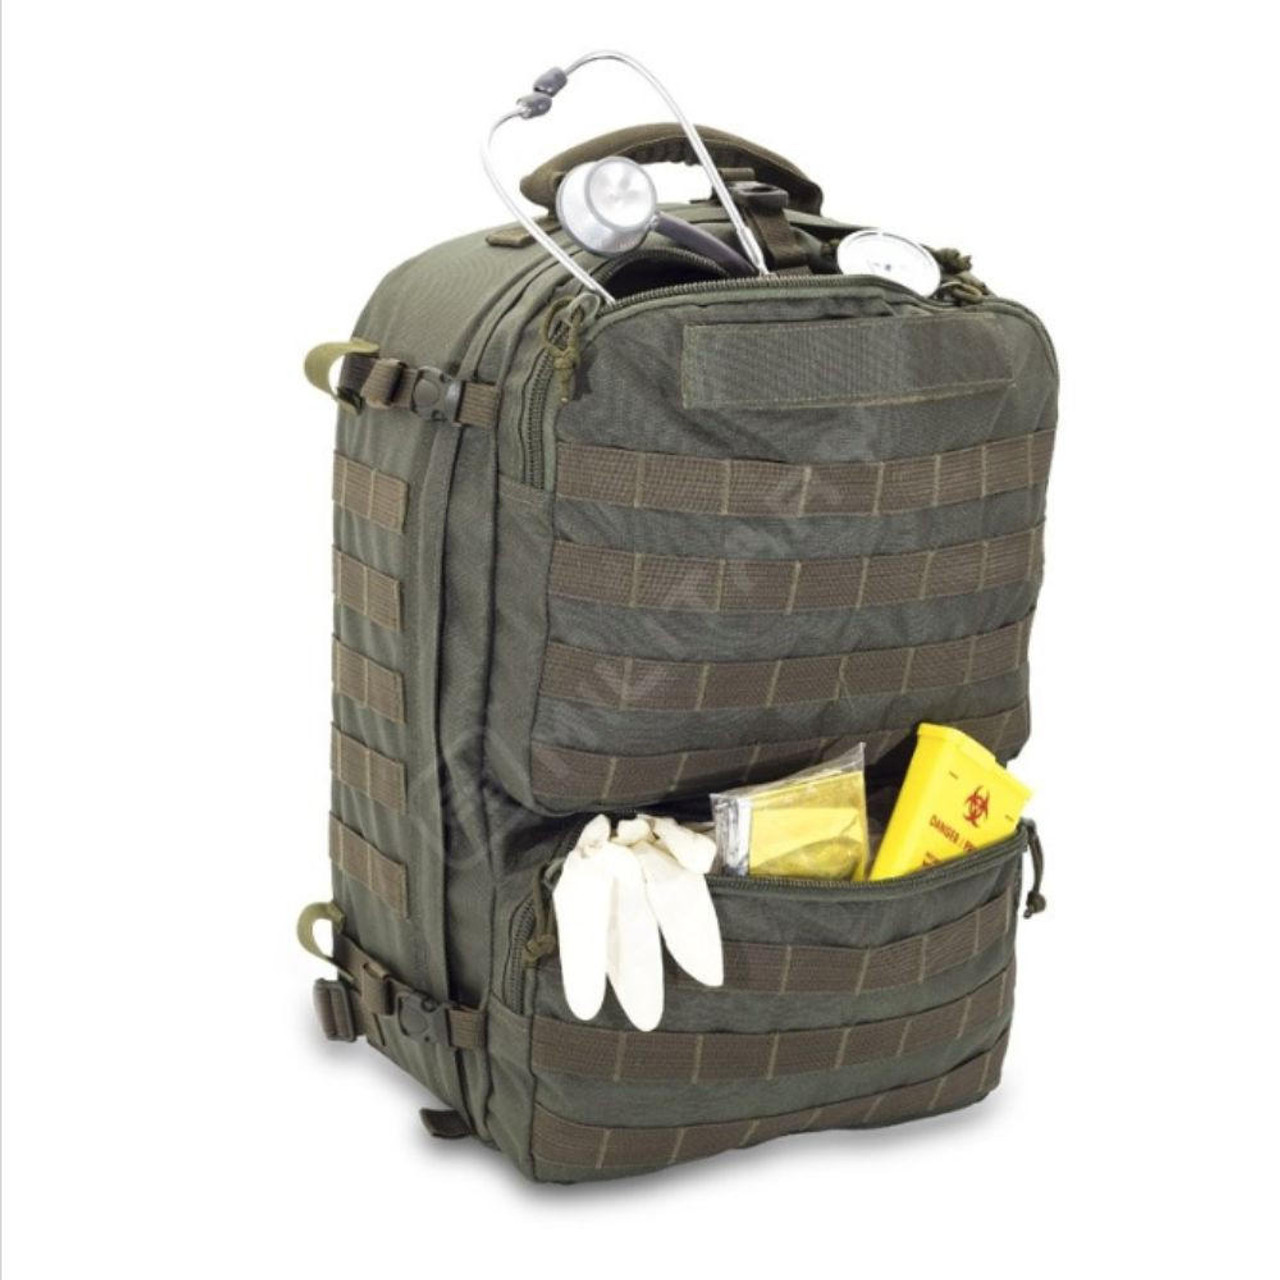  Large Medical Backpack for Emergency Response Green 32 Litre 